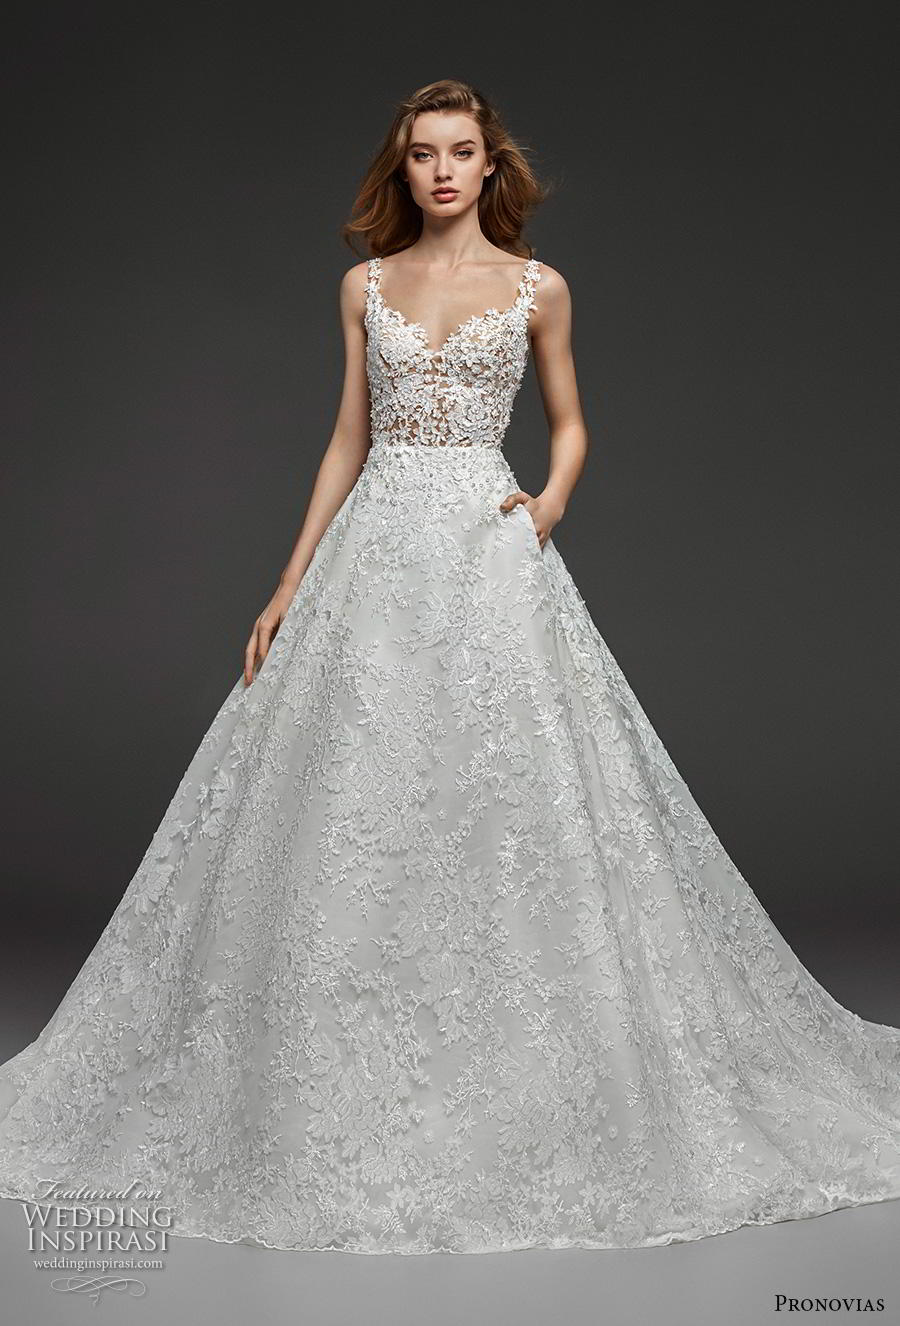 Atelier Pronovias 2019 Wedding Dresses — “In Bloom” Bridal Collection ...